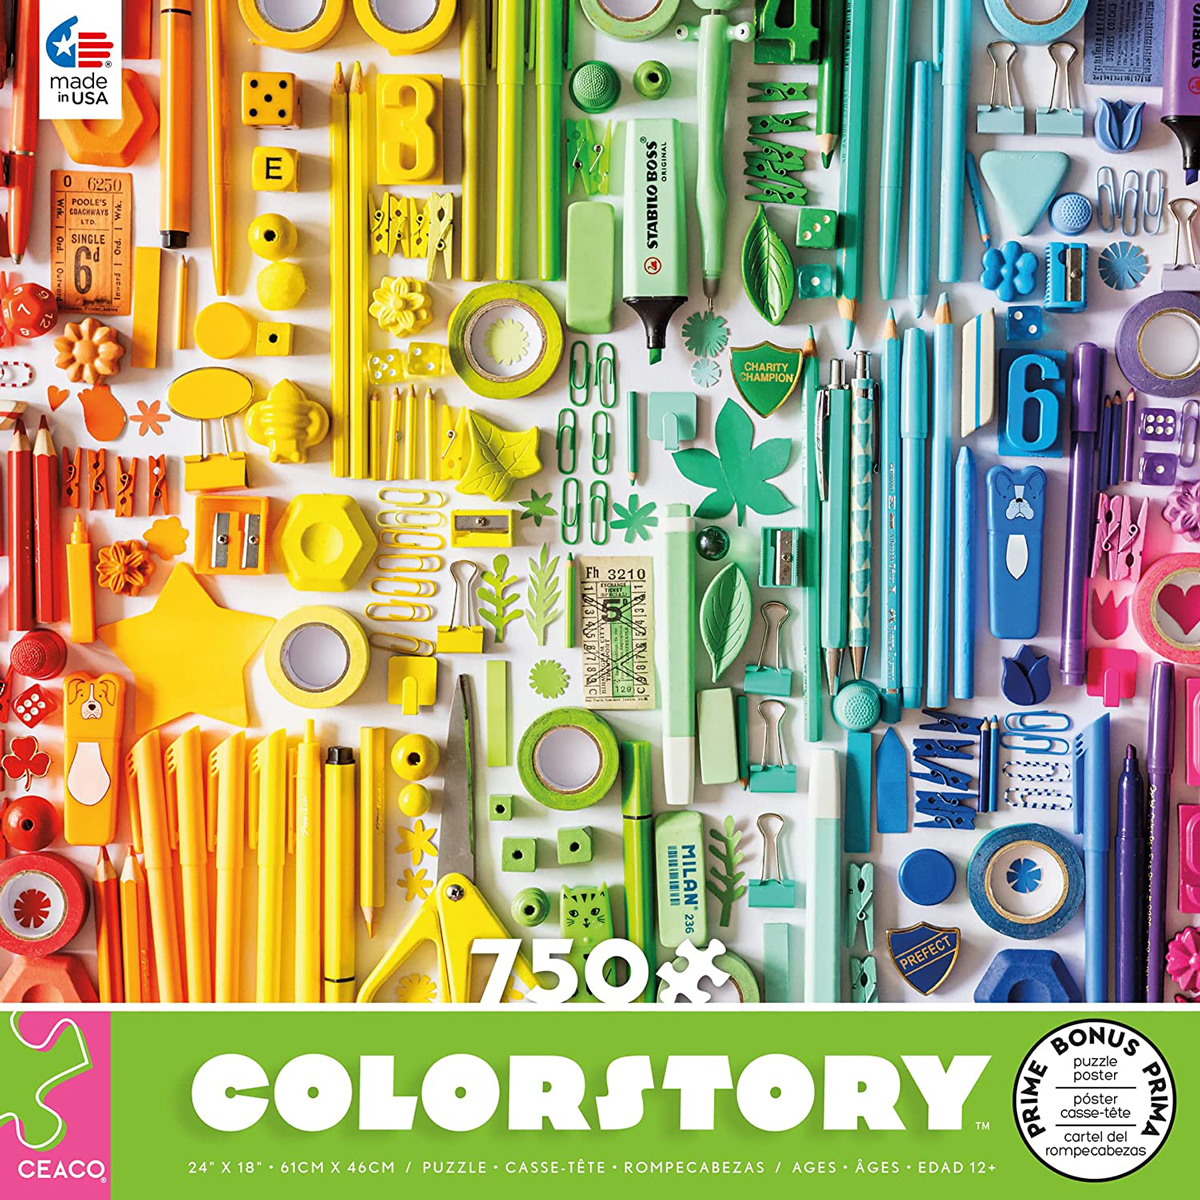 Colorstory - Stationary